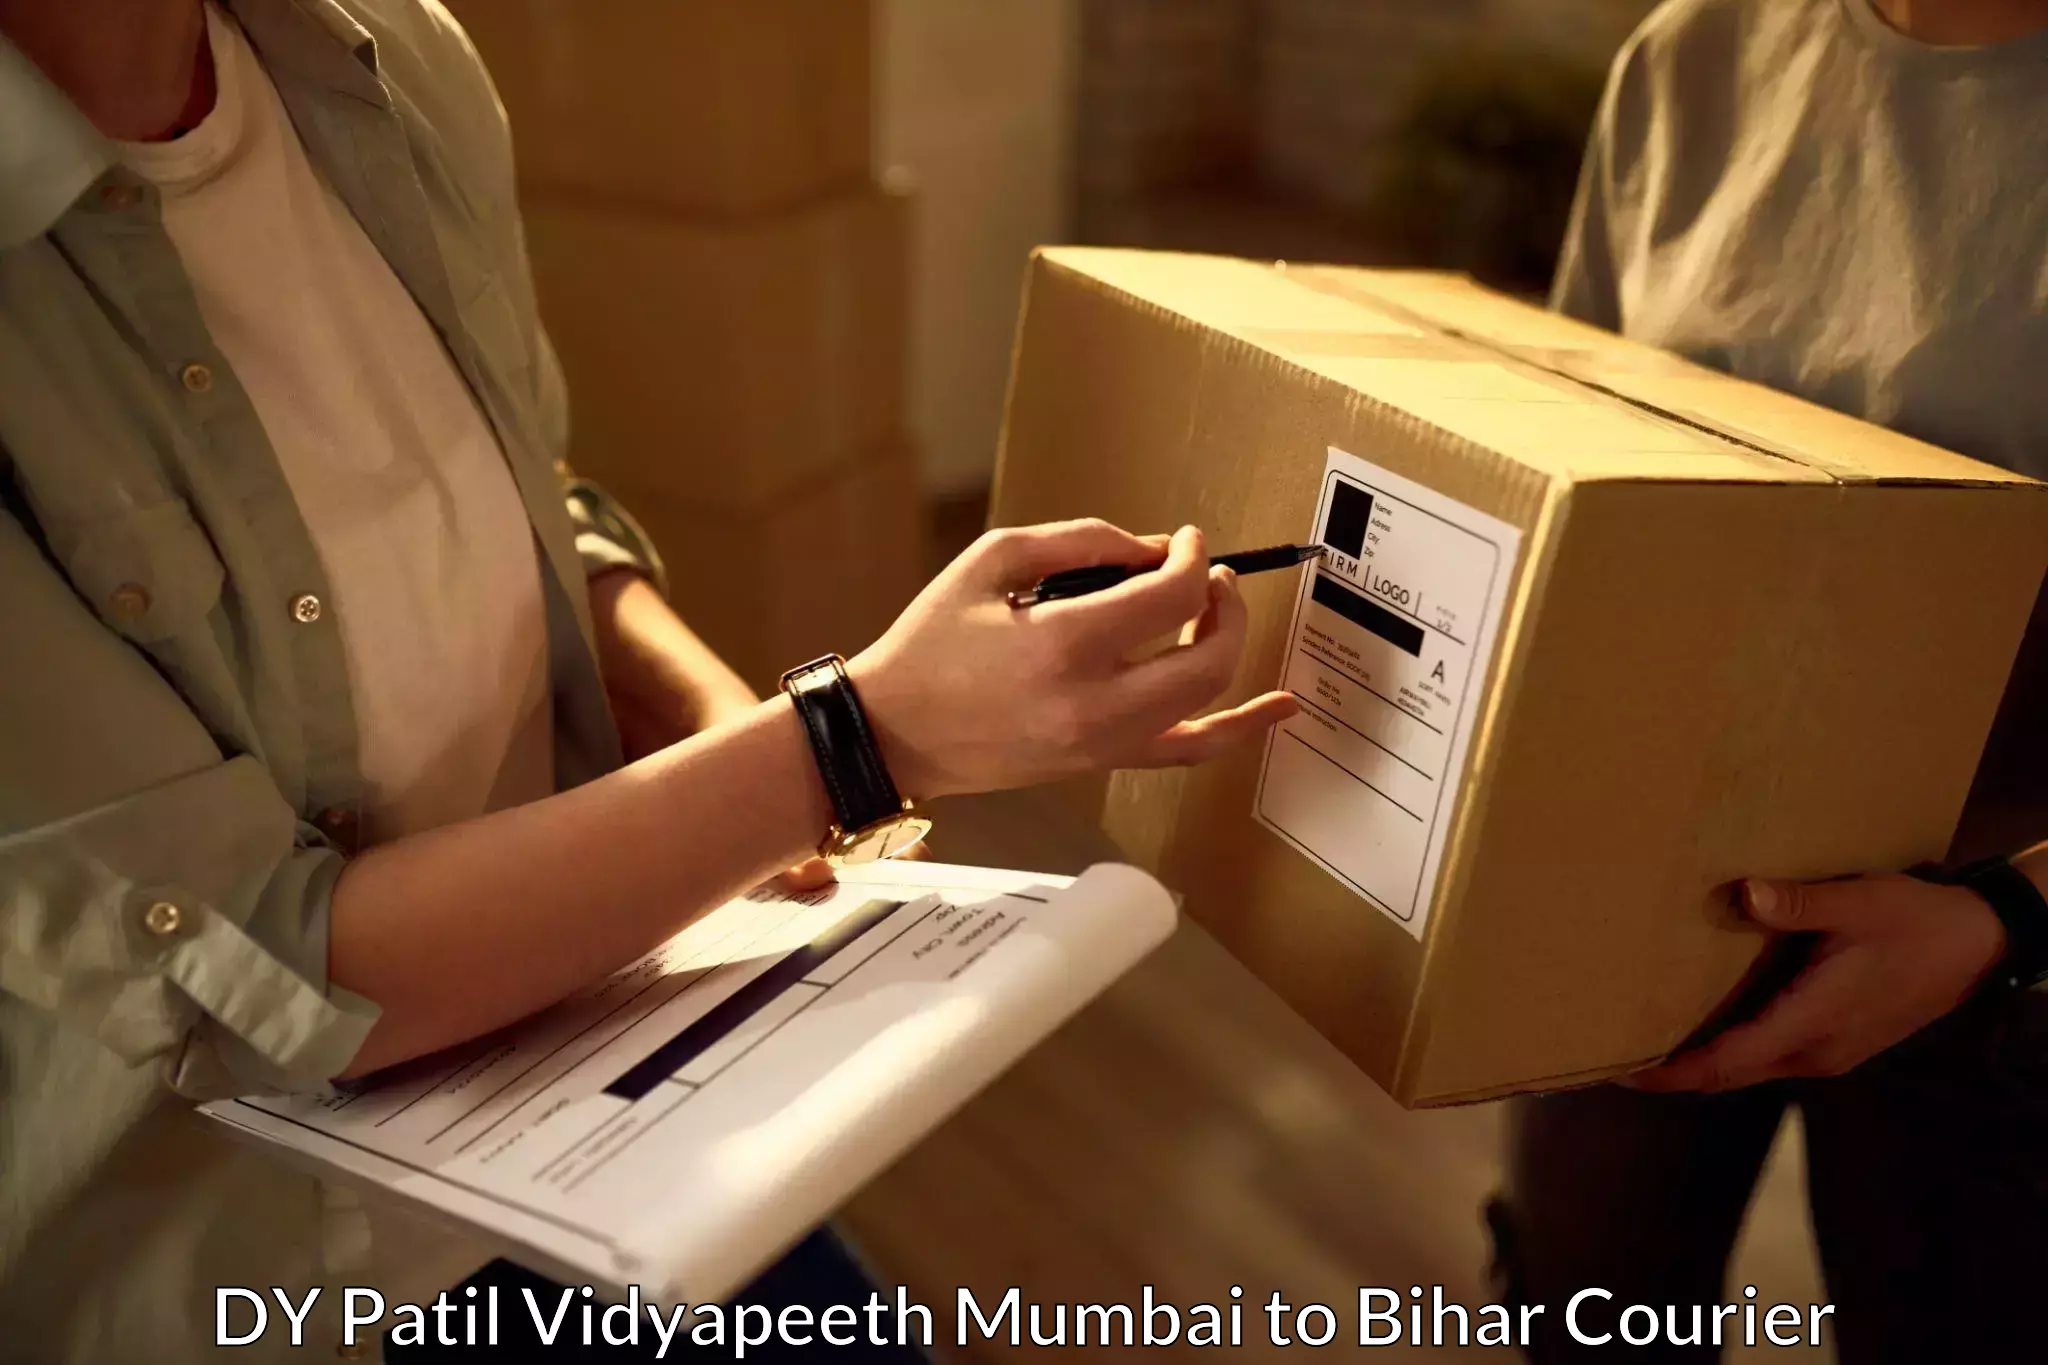 User-friendly courier app DY Patil Vidyapeeth Mumbai to Bhorey